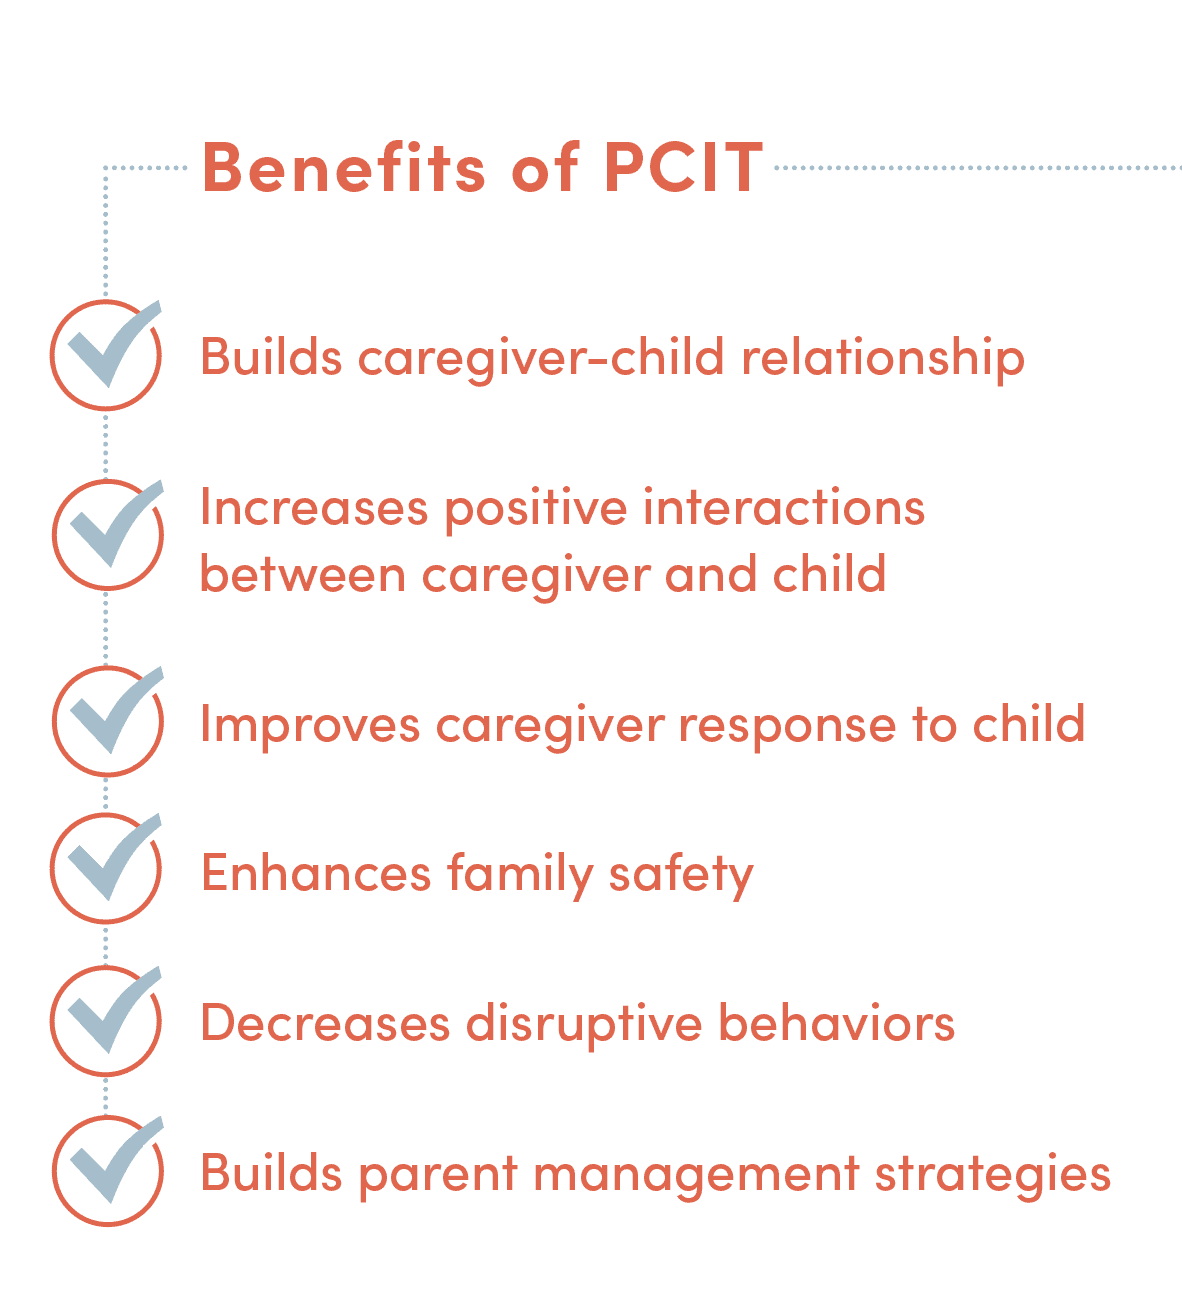 Benefits of PCIT